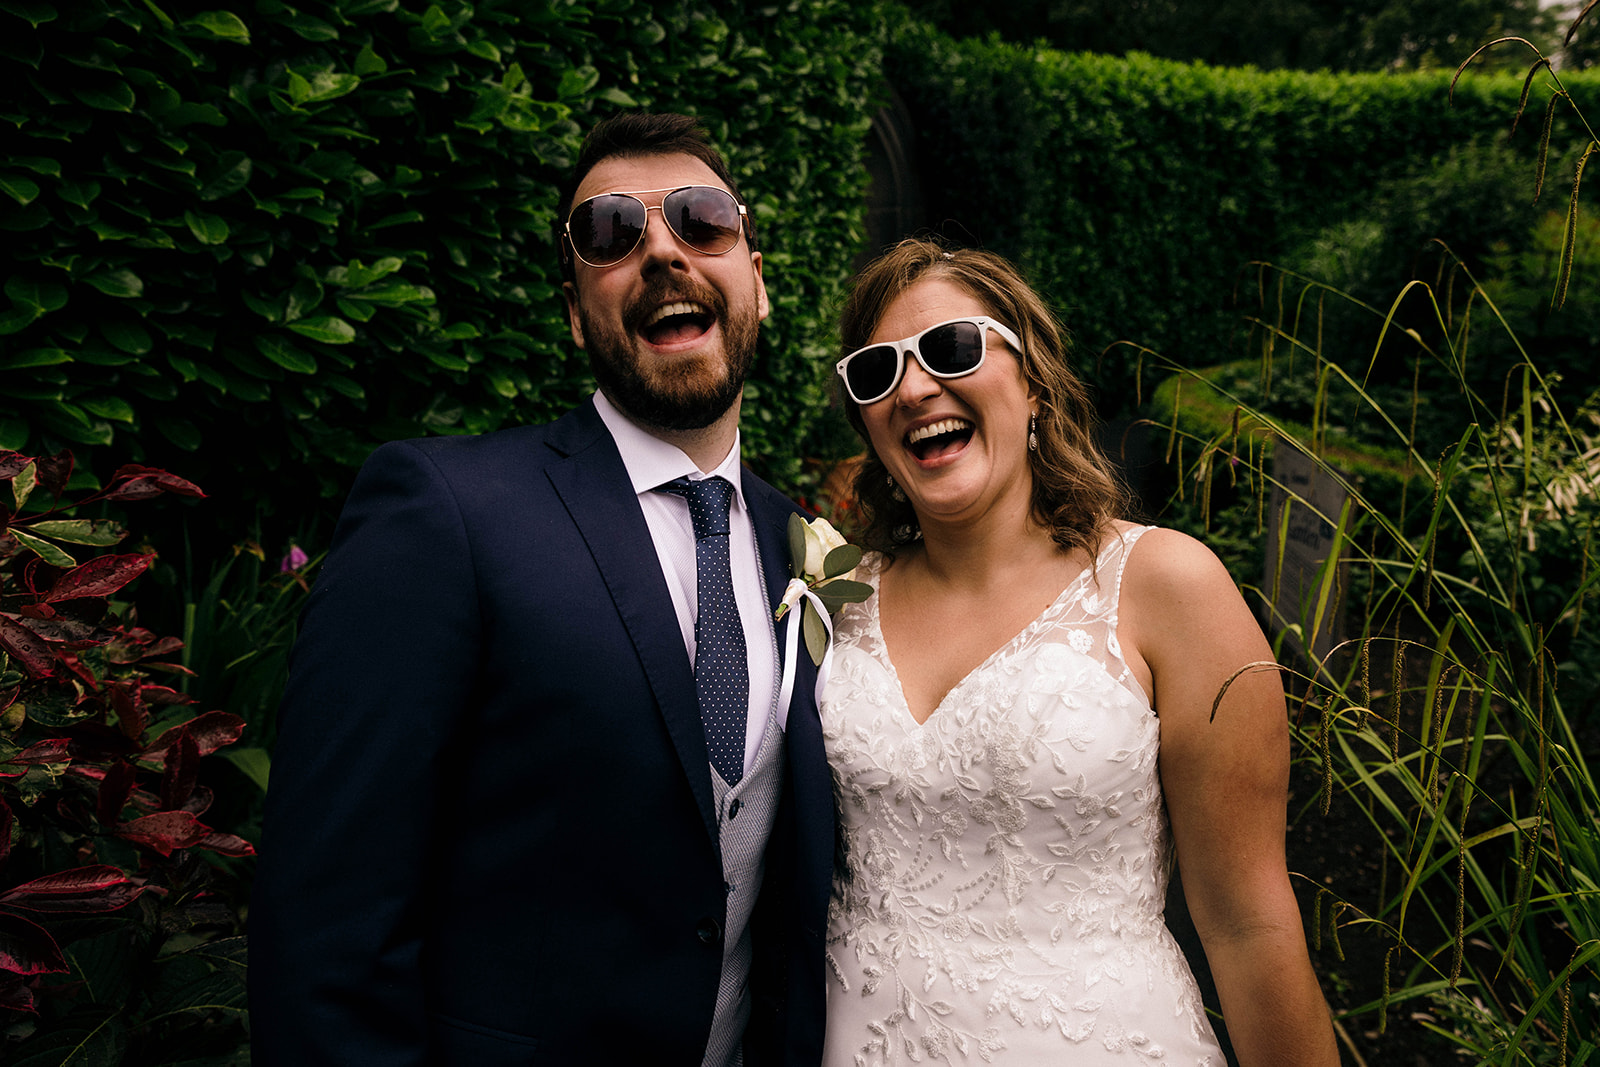 fun couple wi wedding sunglasses 